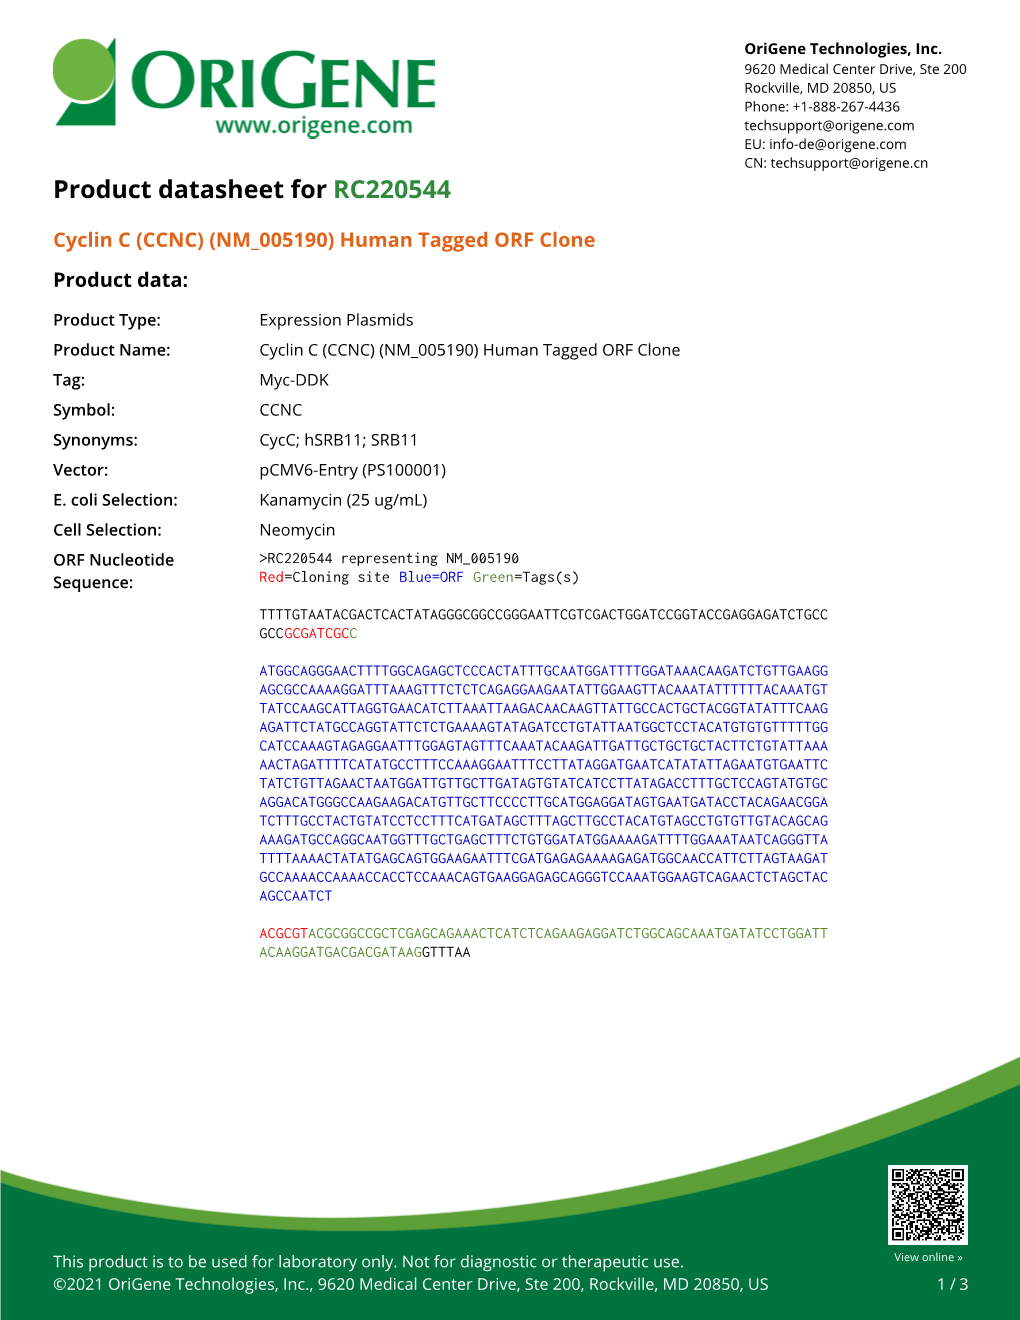 Cyclin C (CCNC) (NM 005190) Human Tagged ORF Clone Product Data